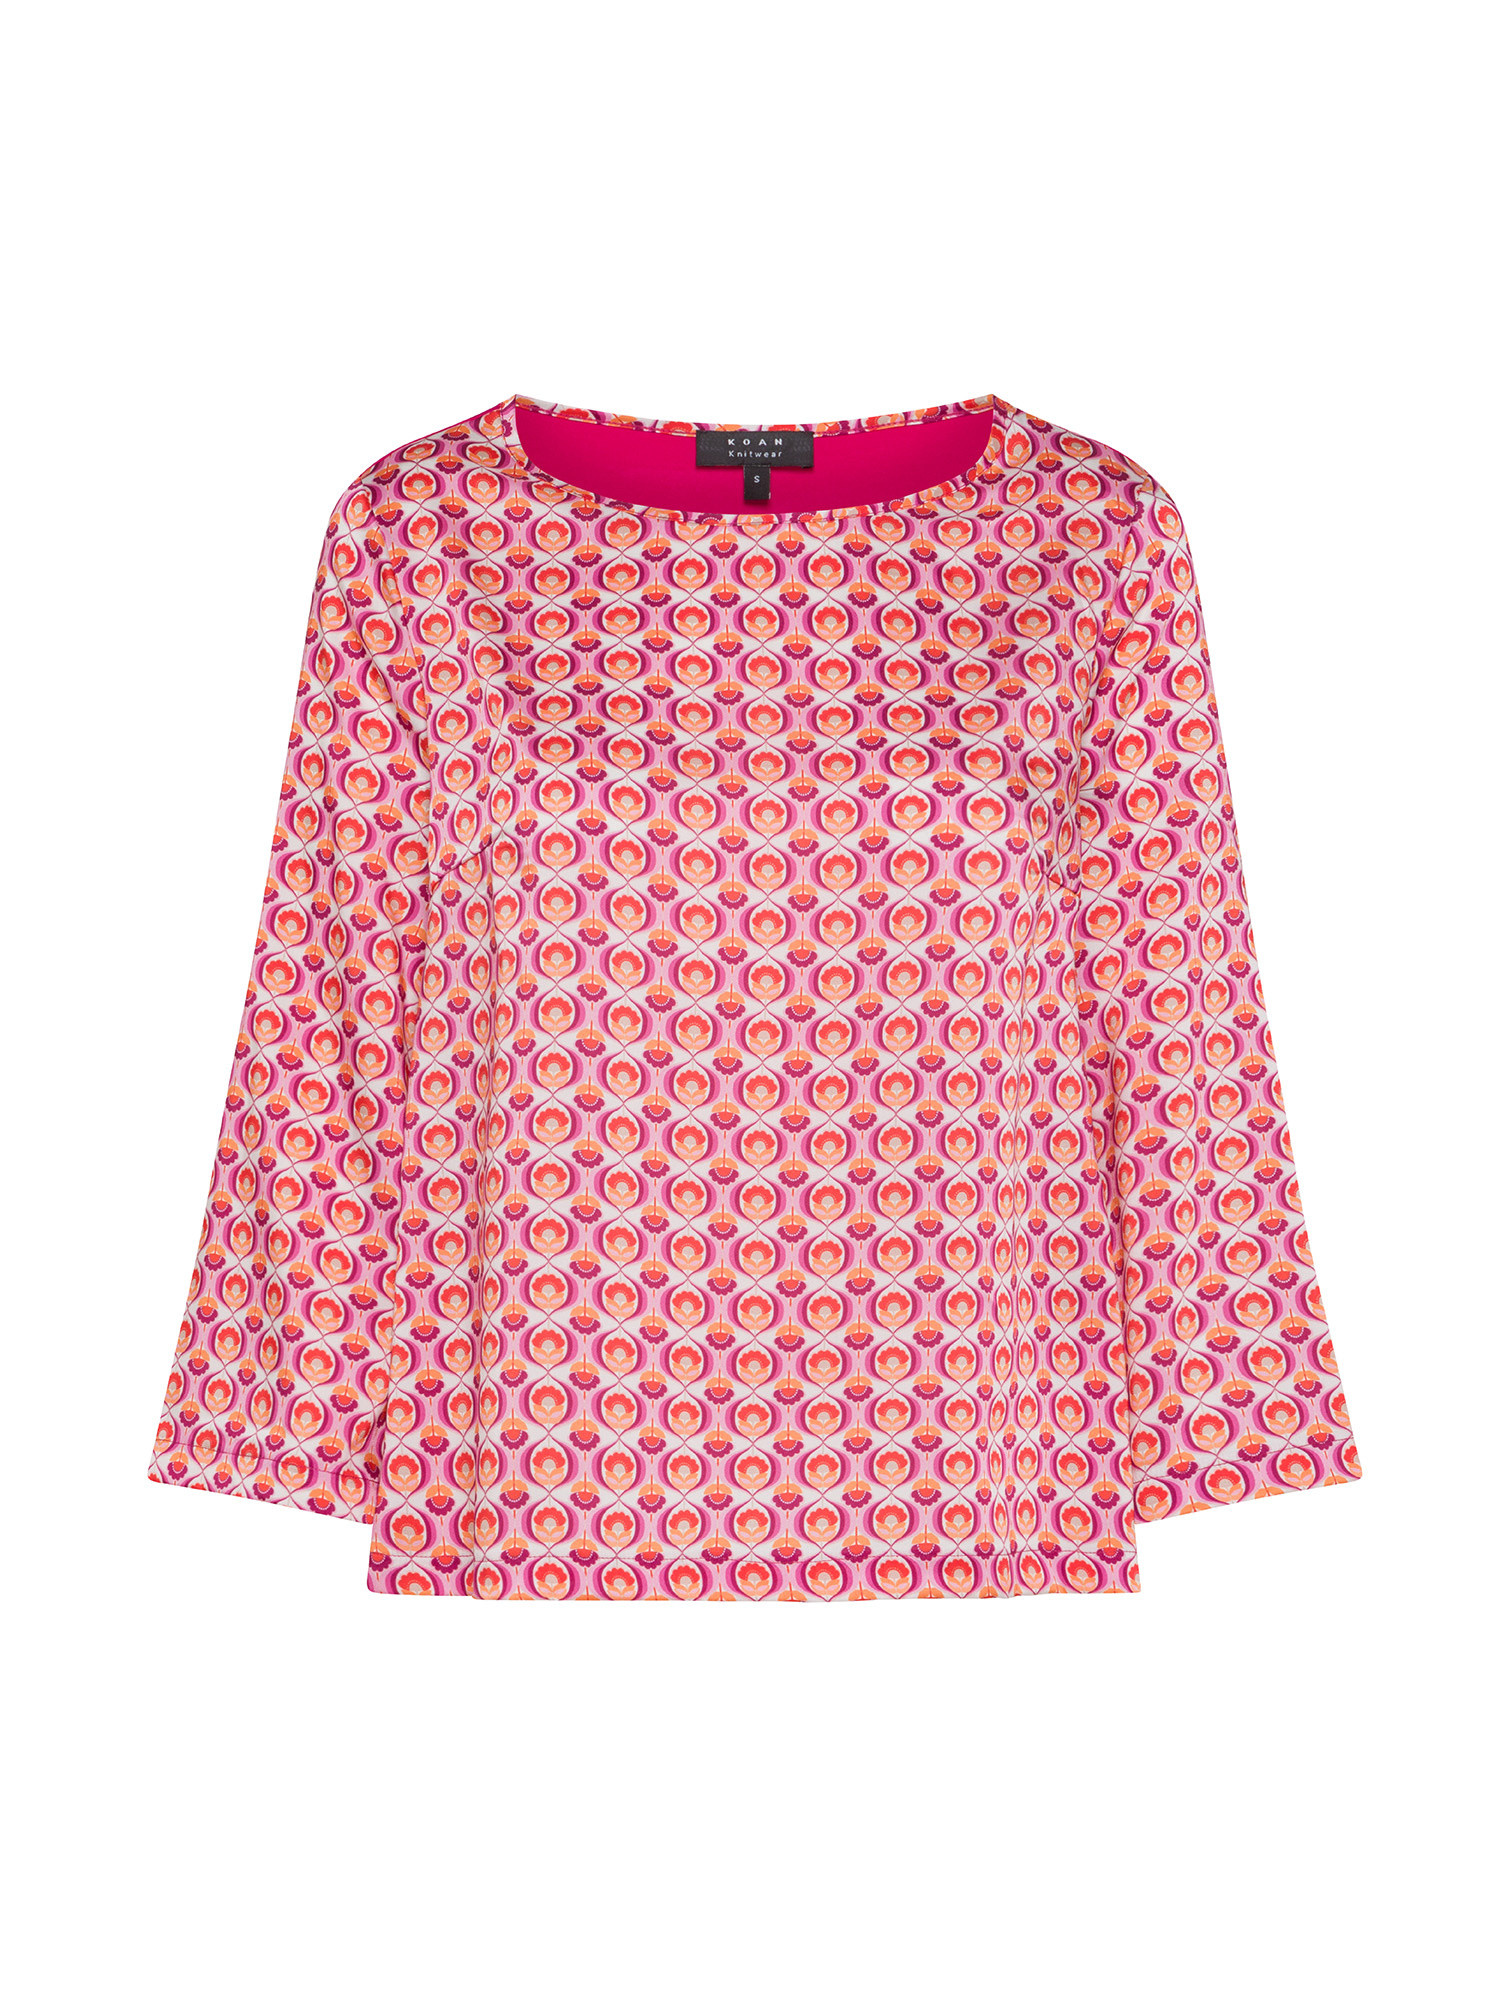 Koan - Patterned T-shirt, Pink Fuchsia, large image number 0